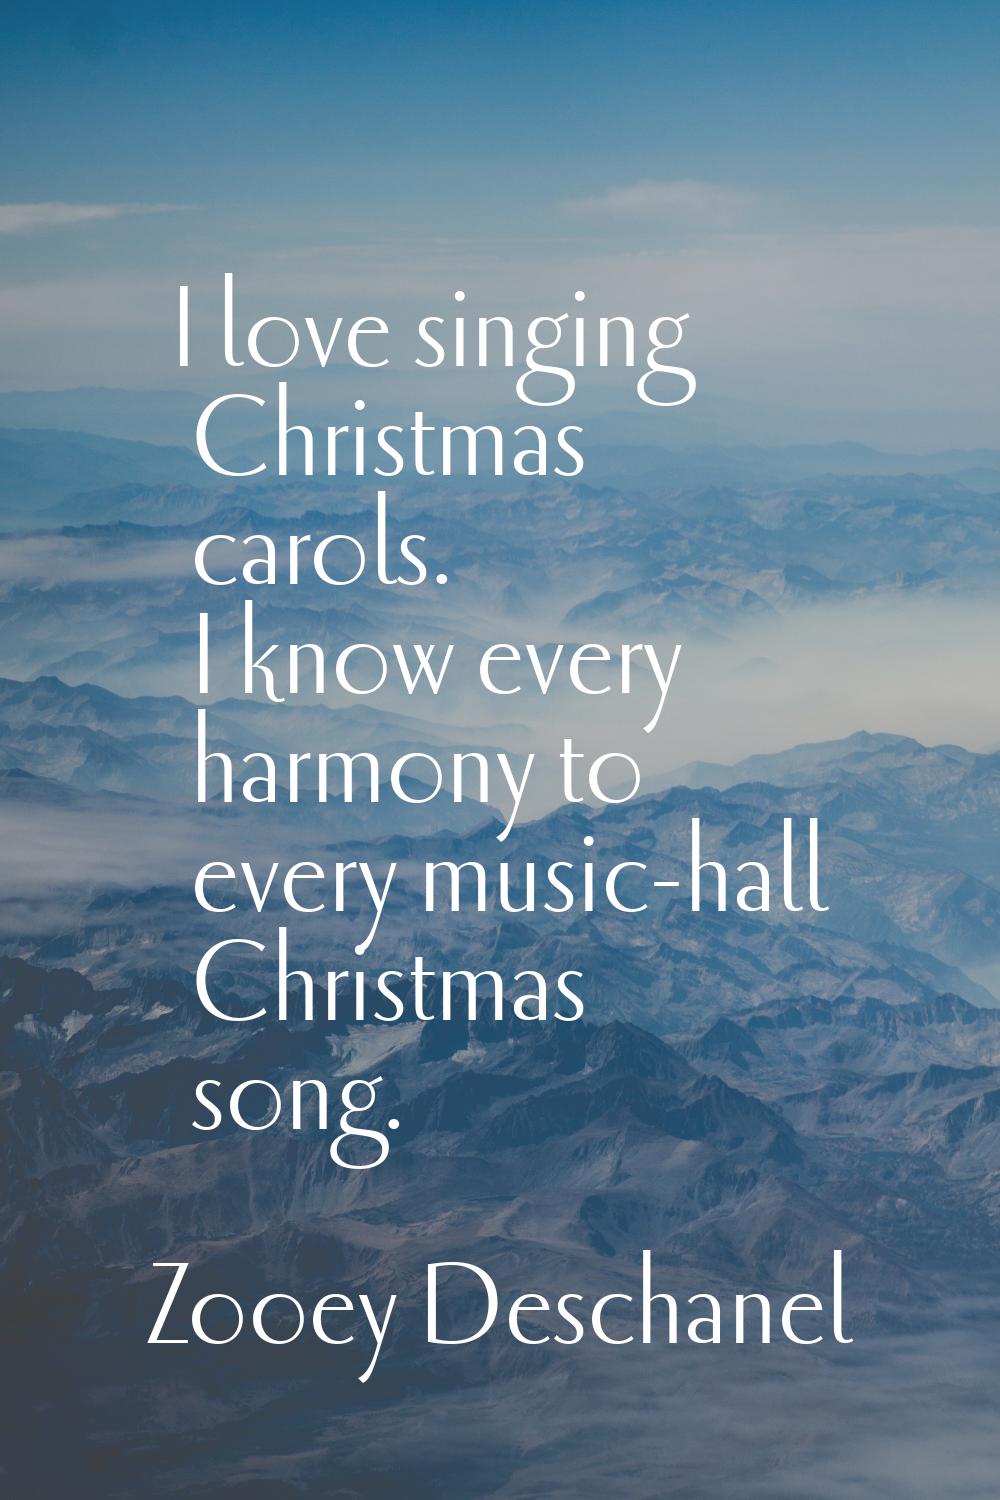 I love singing Christmas carols. I know every harmony to every music-hall Christmas song.